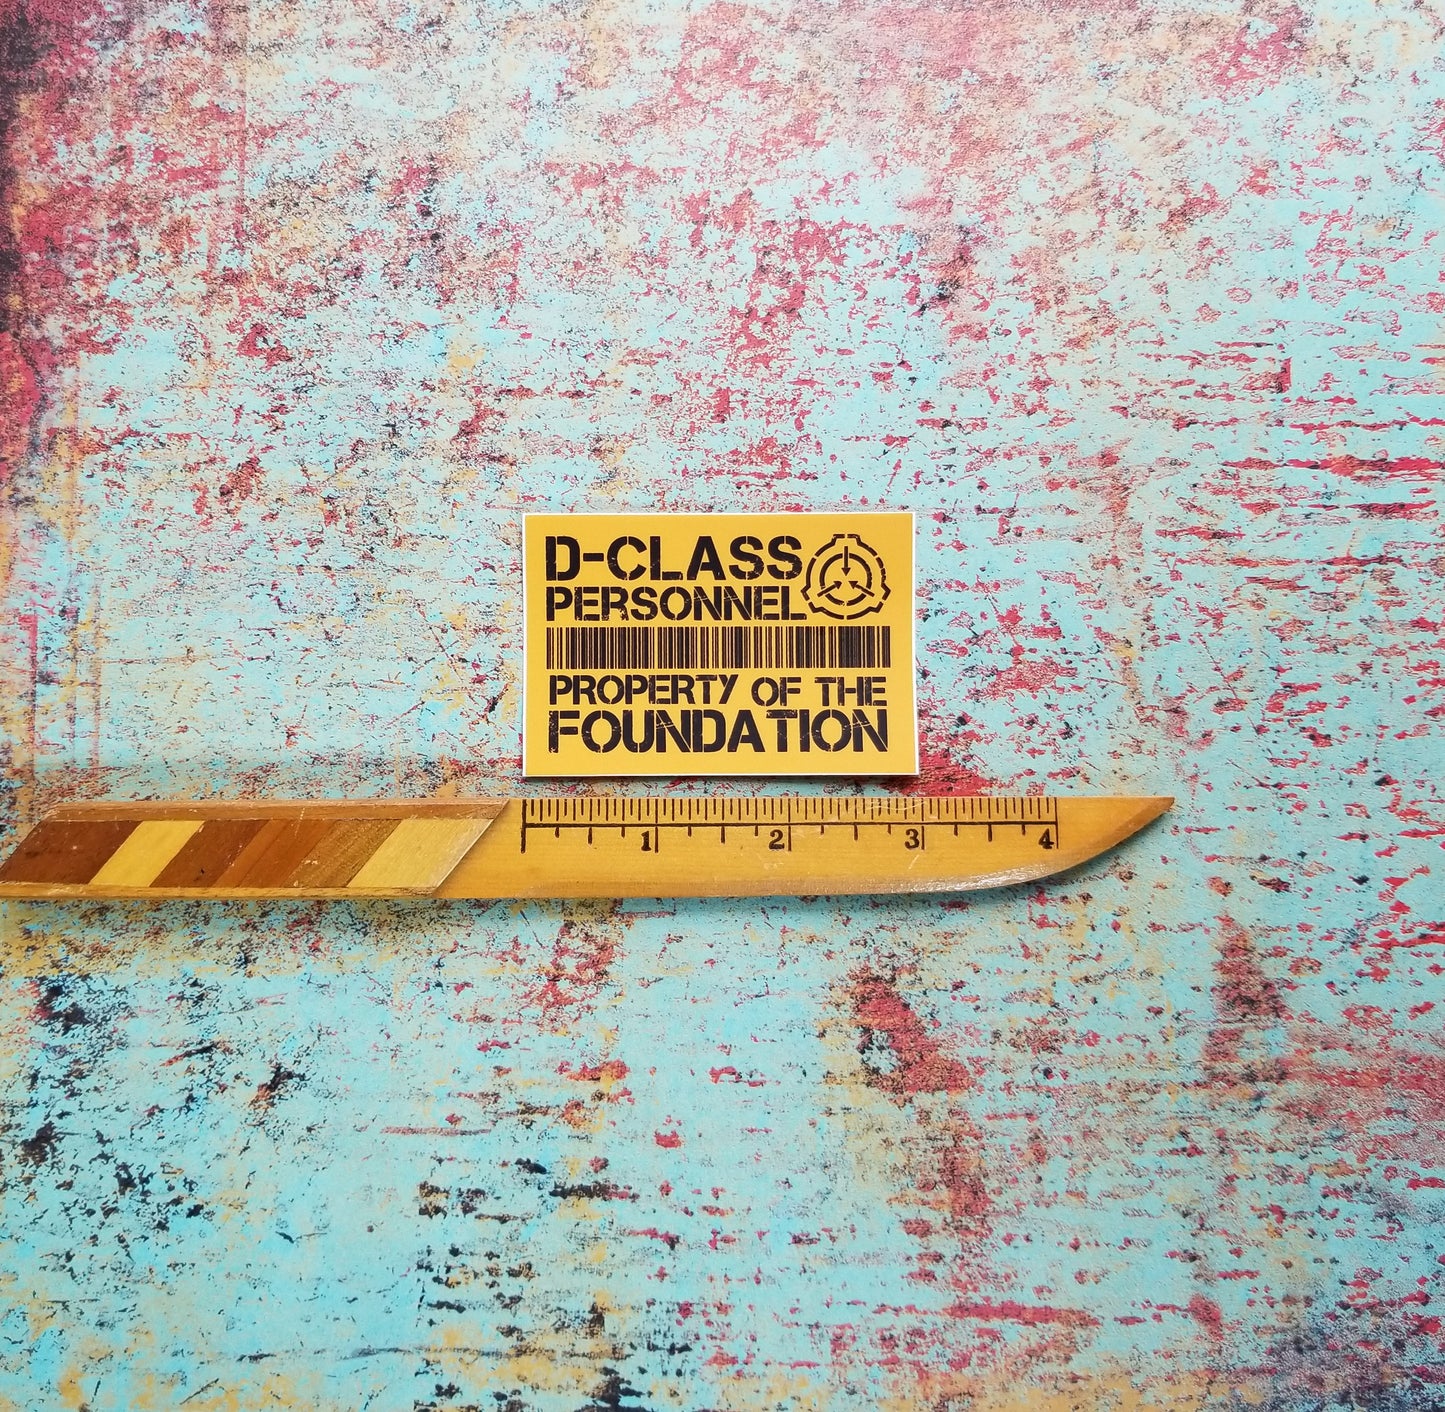 D-Class Personnel Orange Sticker